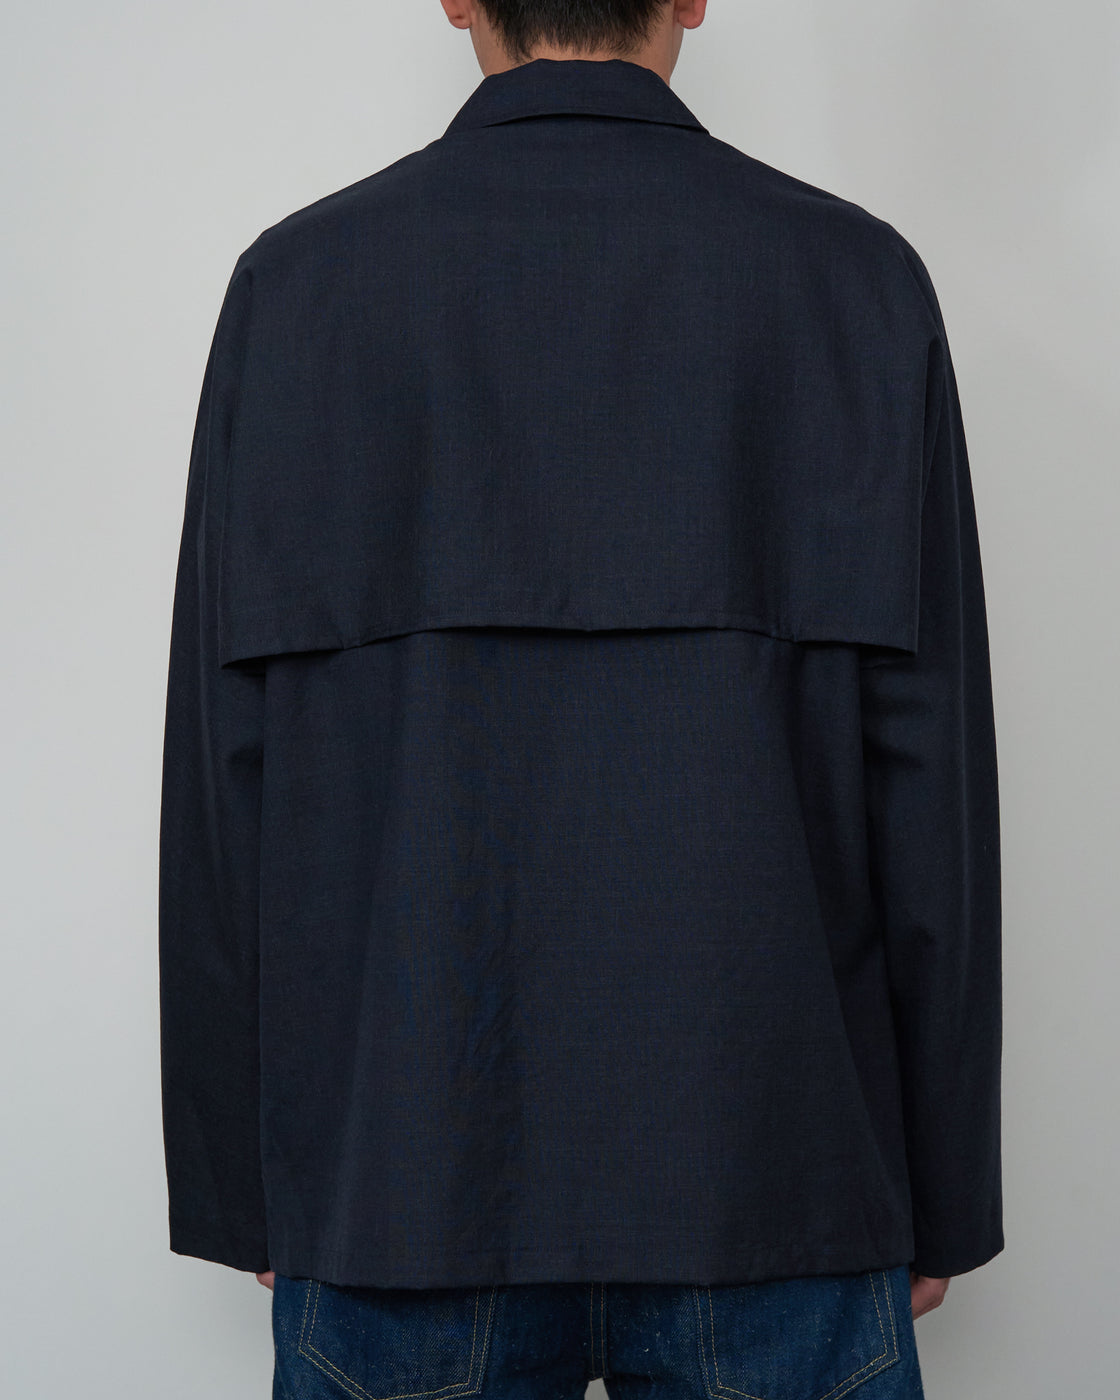 S H FLSN-024 Mackinaw Shirt(Wool), Heather Navy